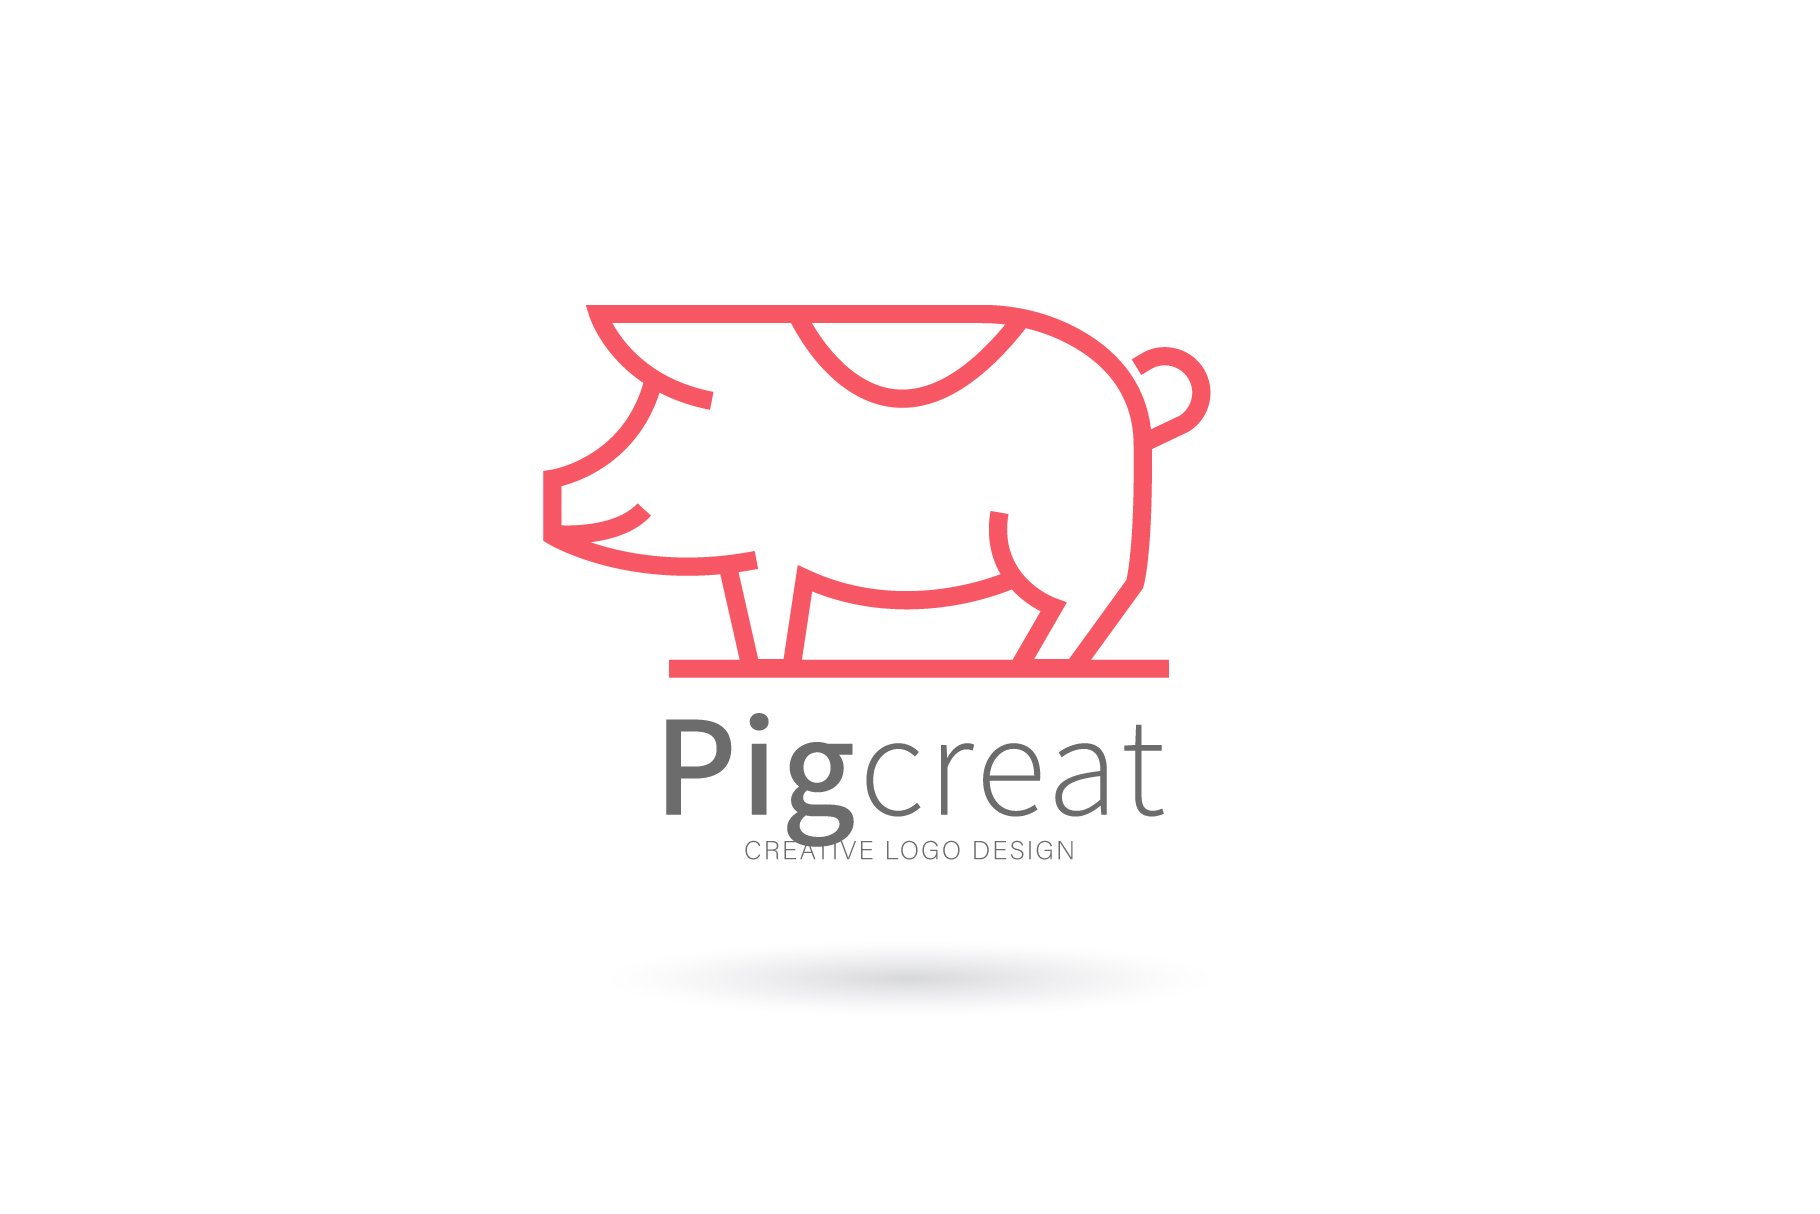 Pig logo, animal logo cover image.